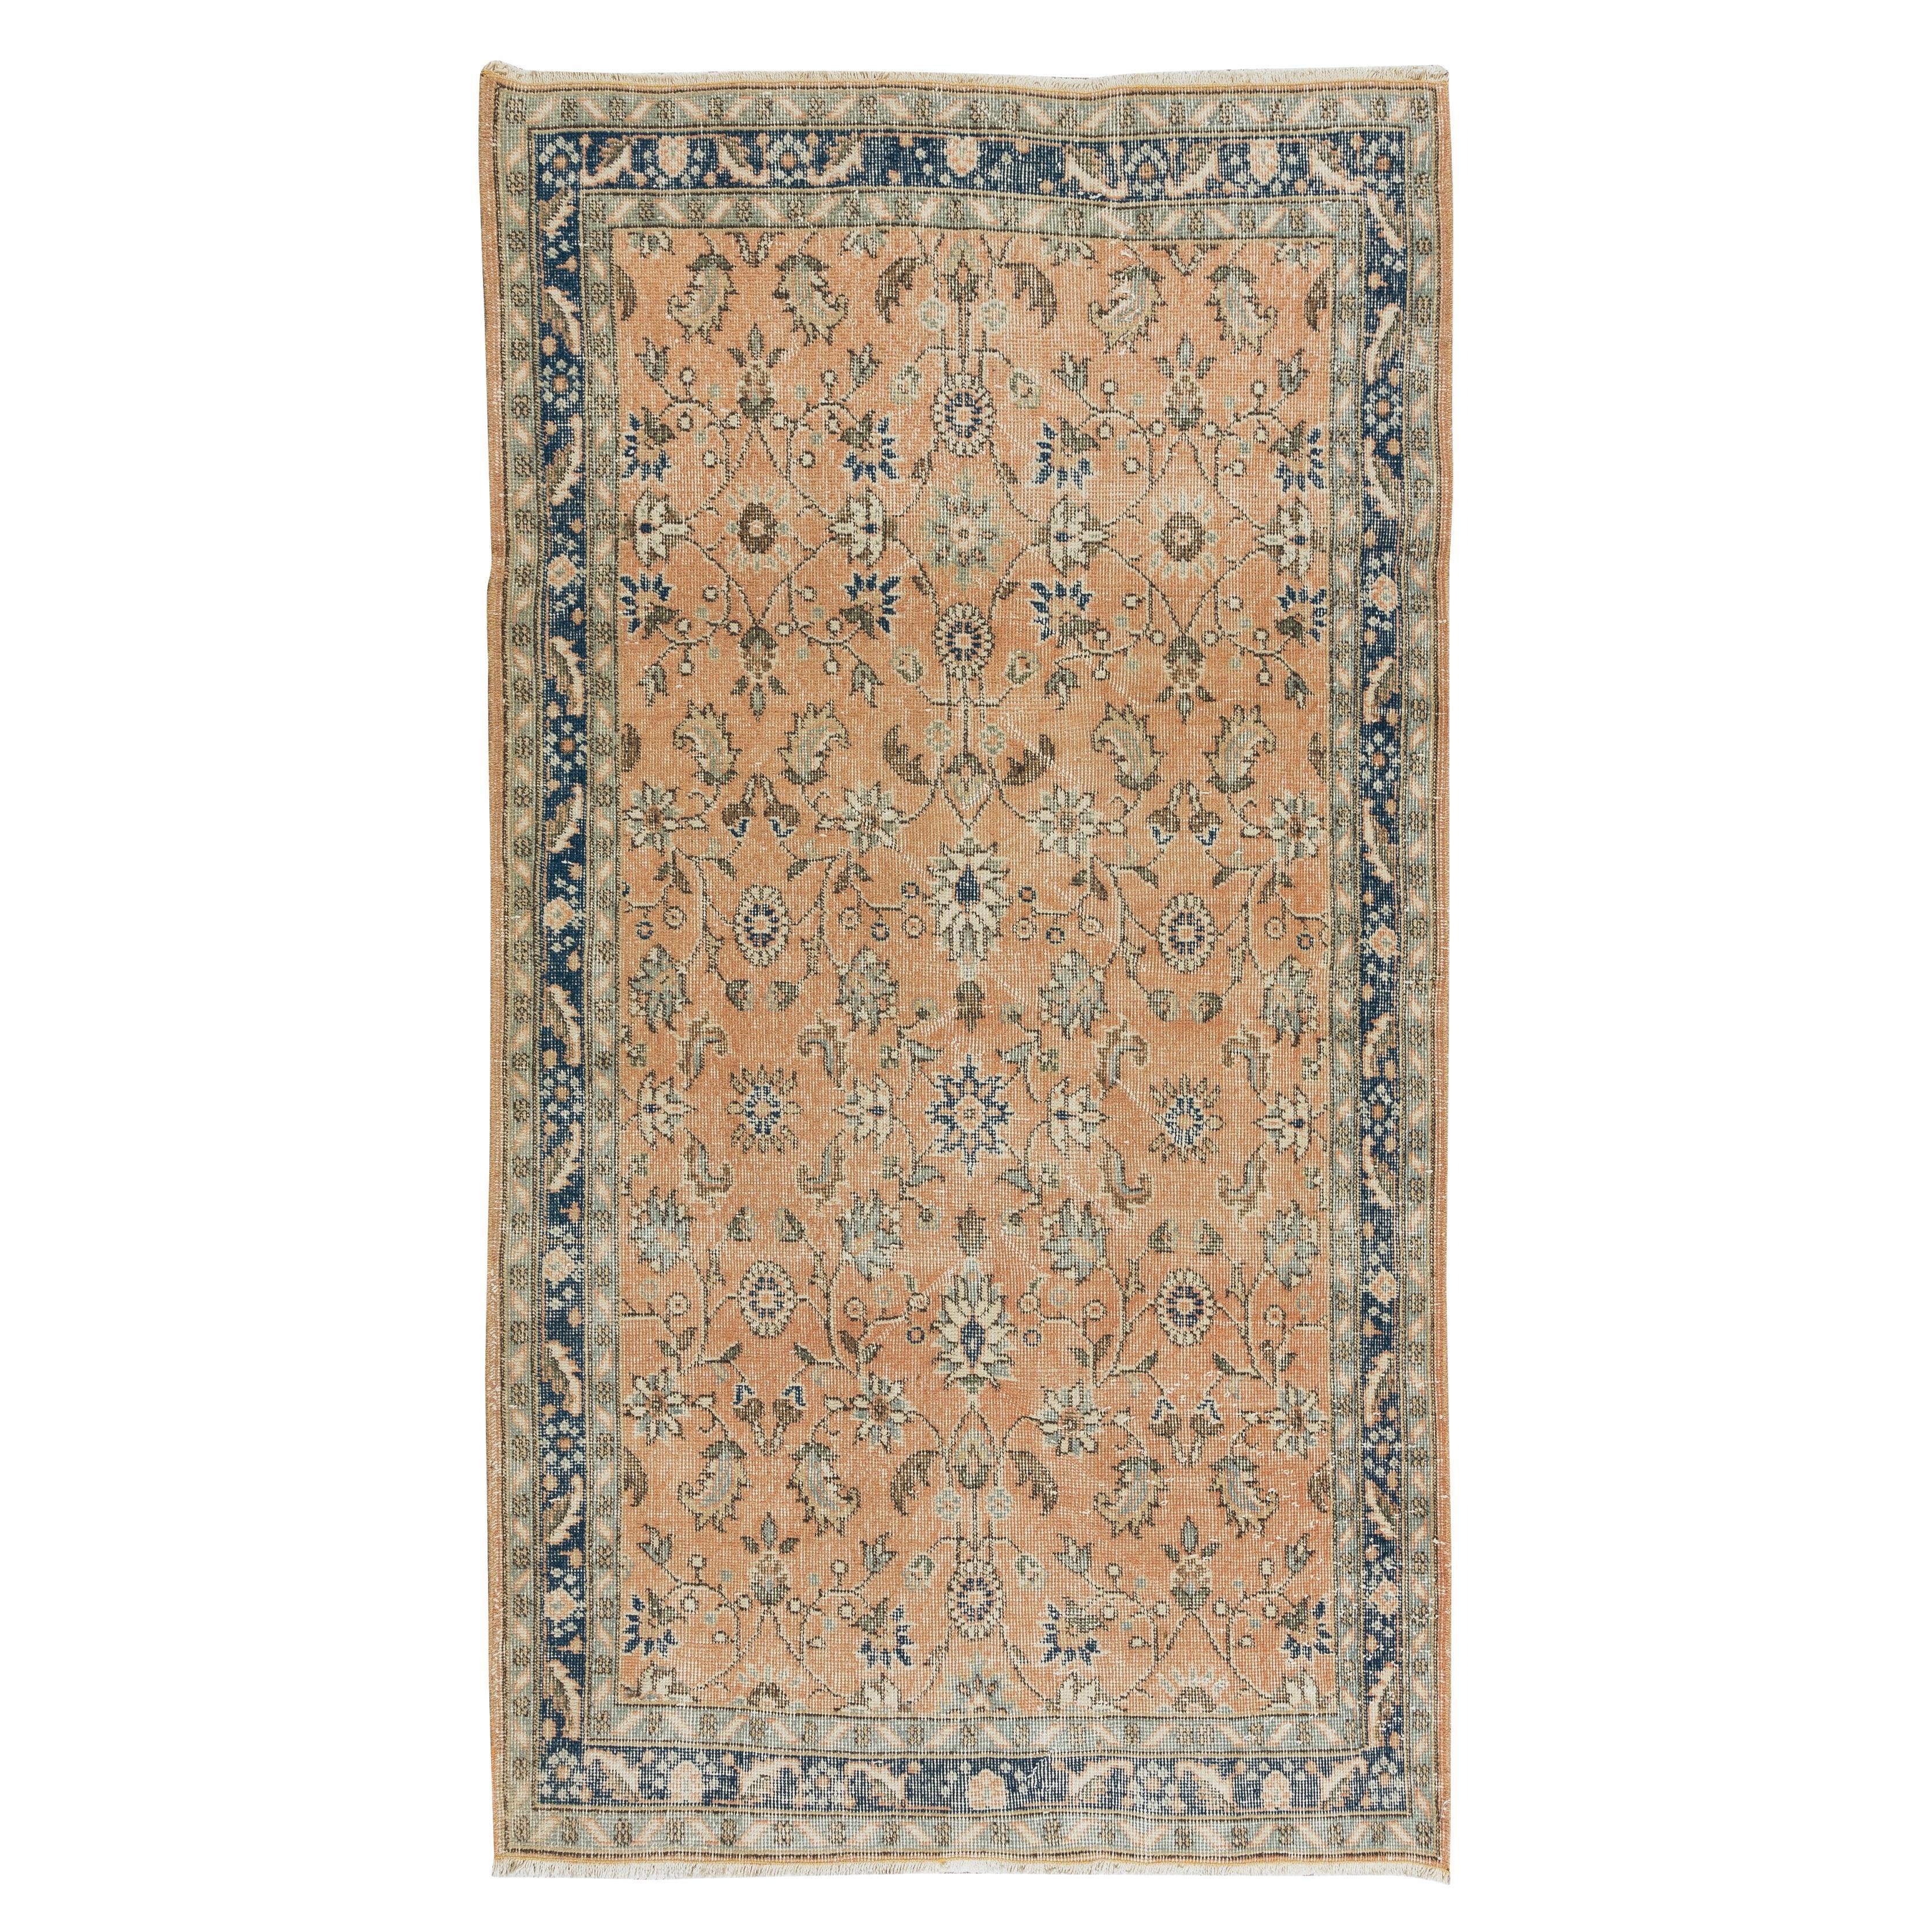 Handmade Floral Pattern Turkish Rug, Authentic Vintage Wool Carpet For Sale